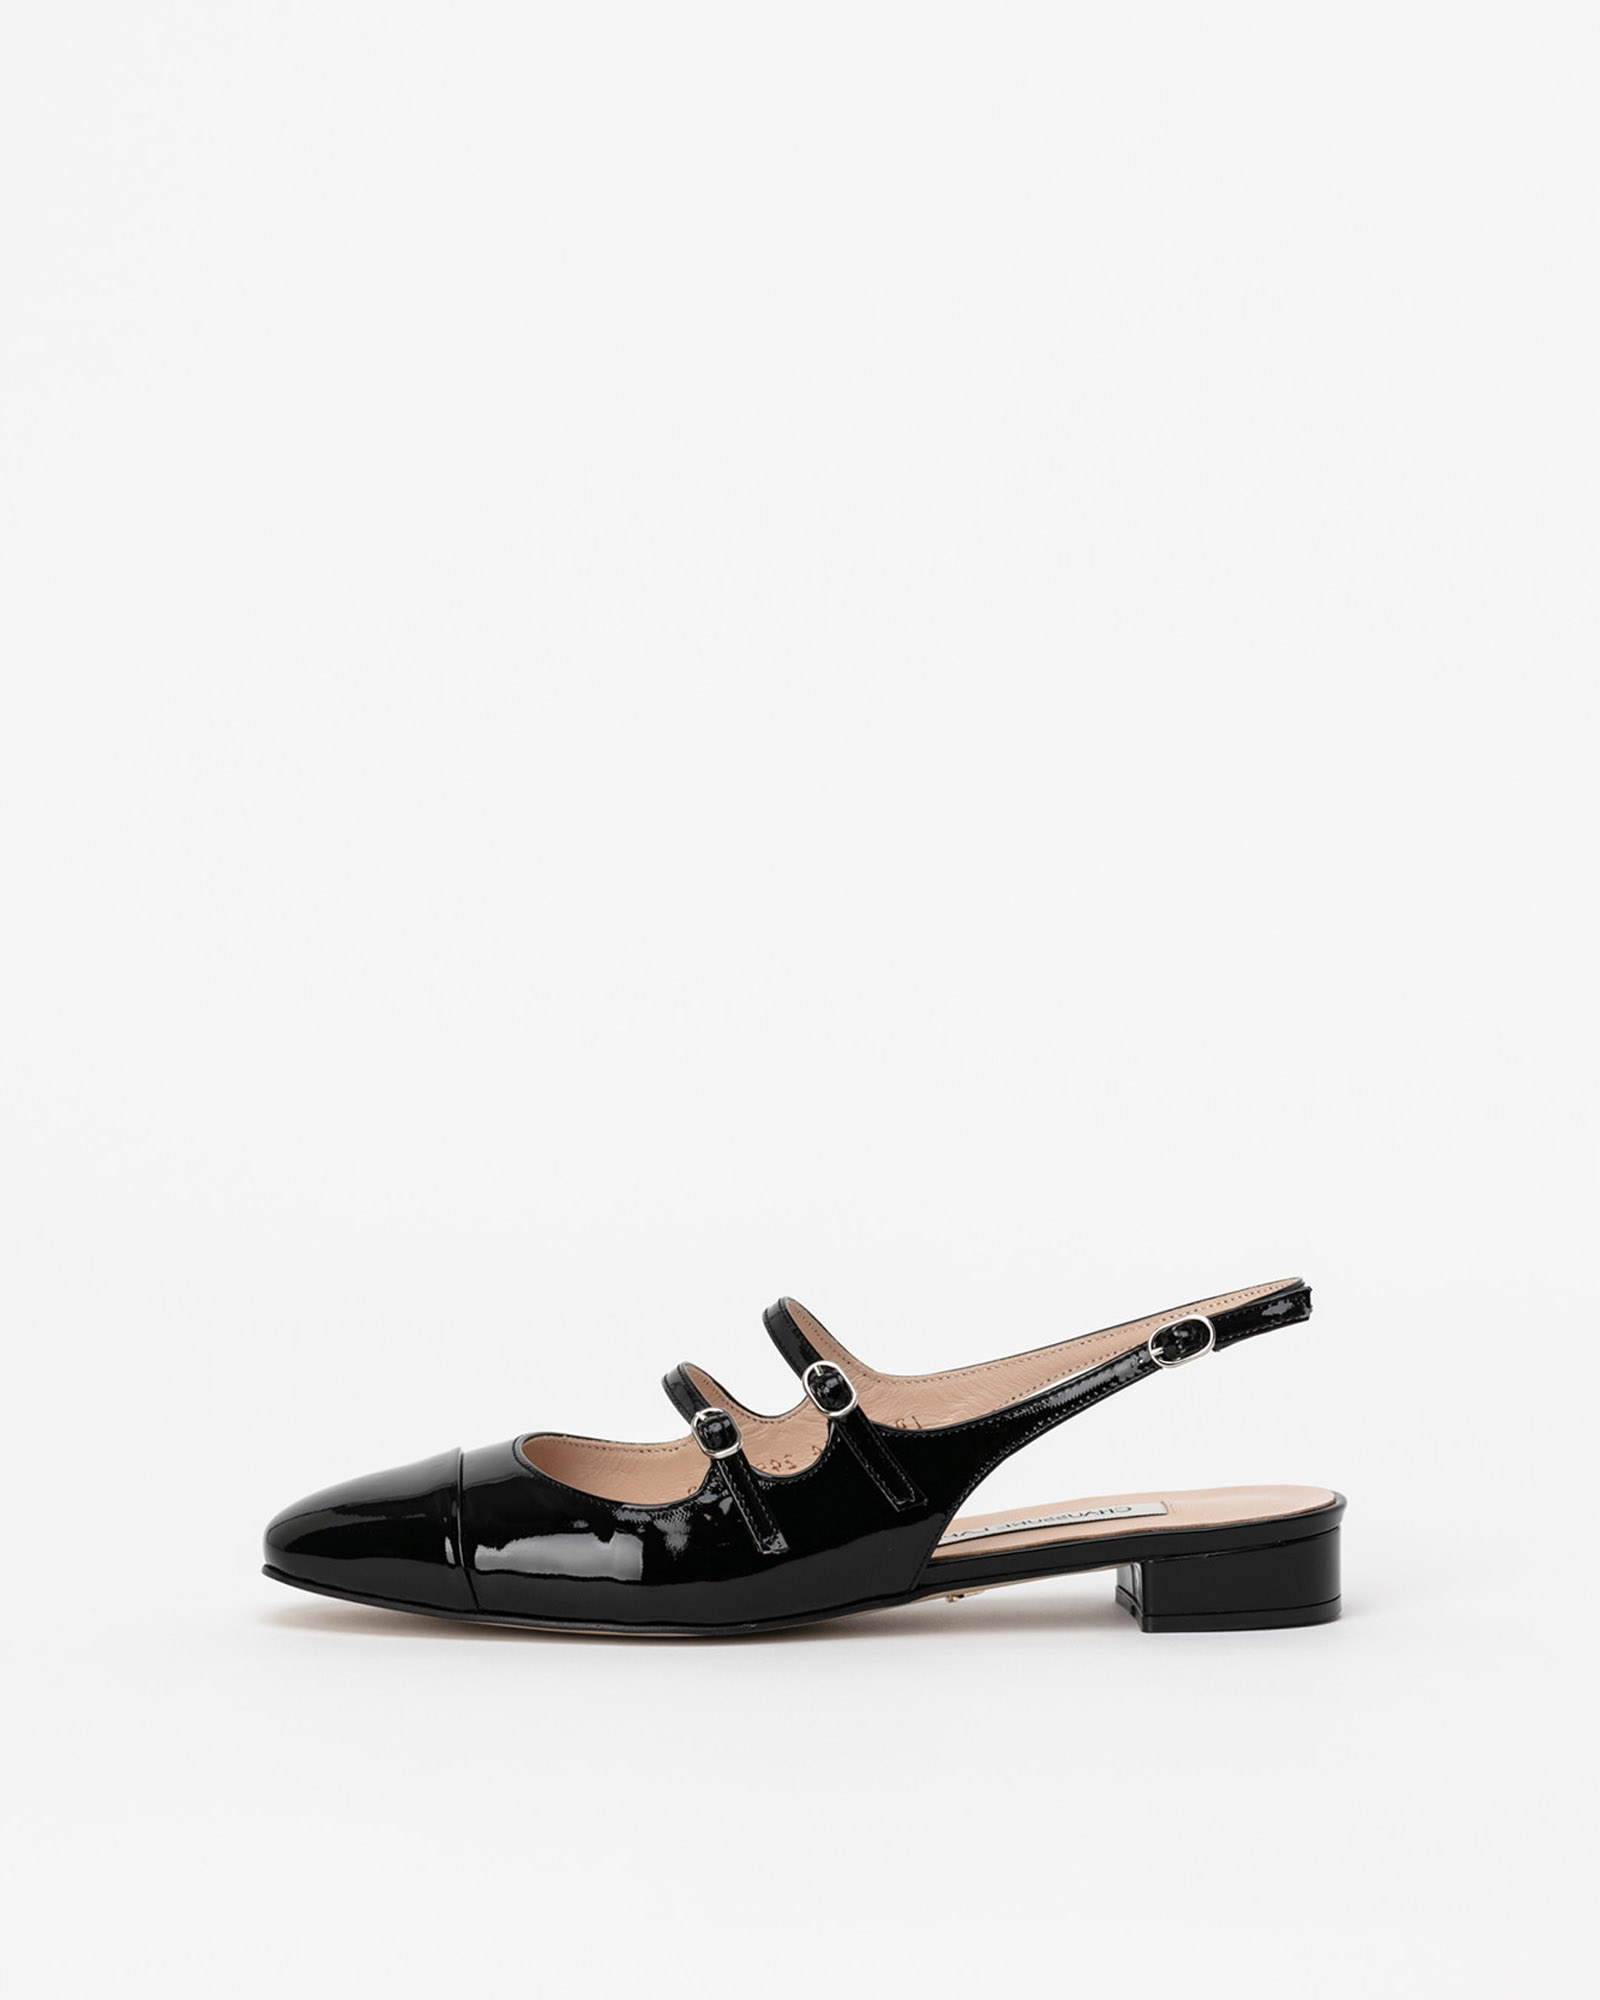 Crescin Maryjane Slingback Flat shoes in Black Patent